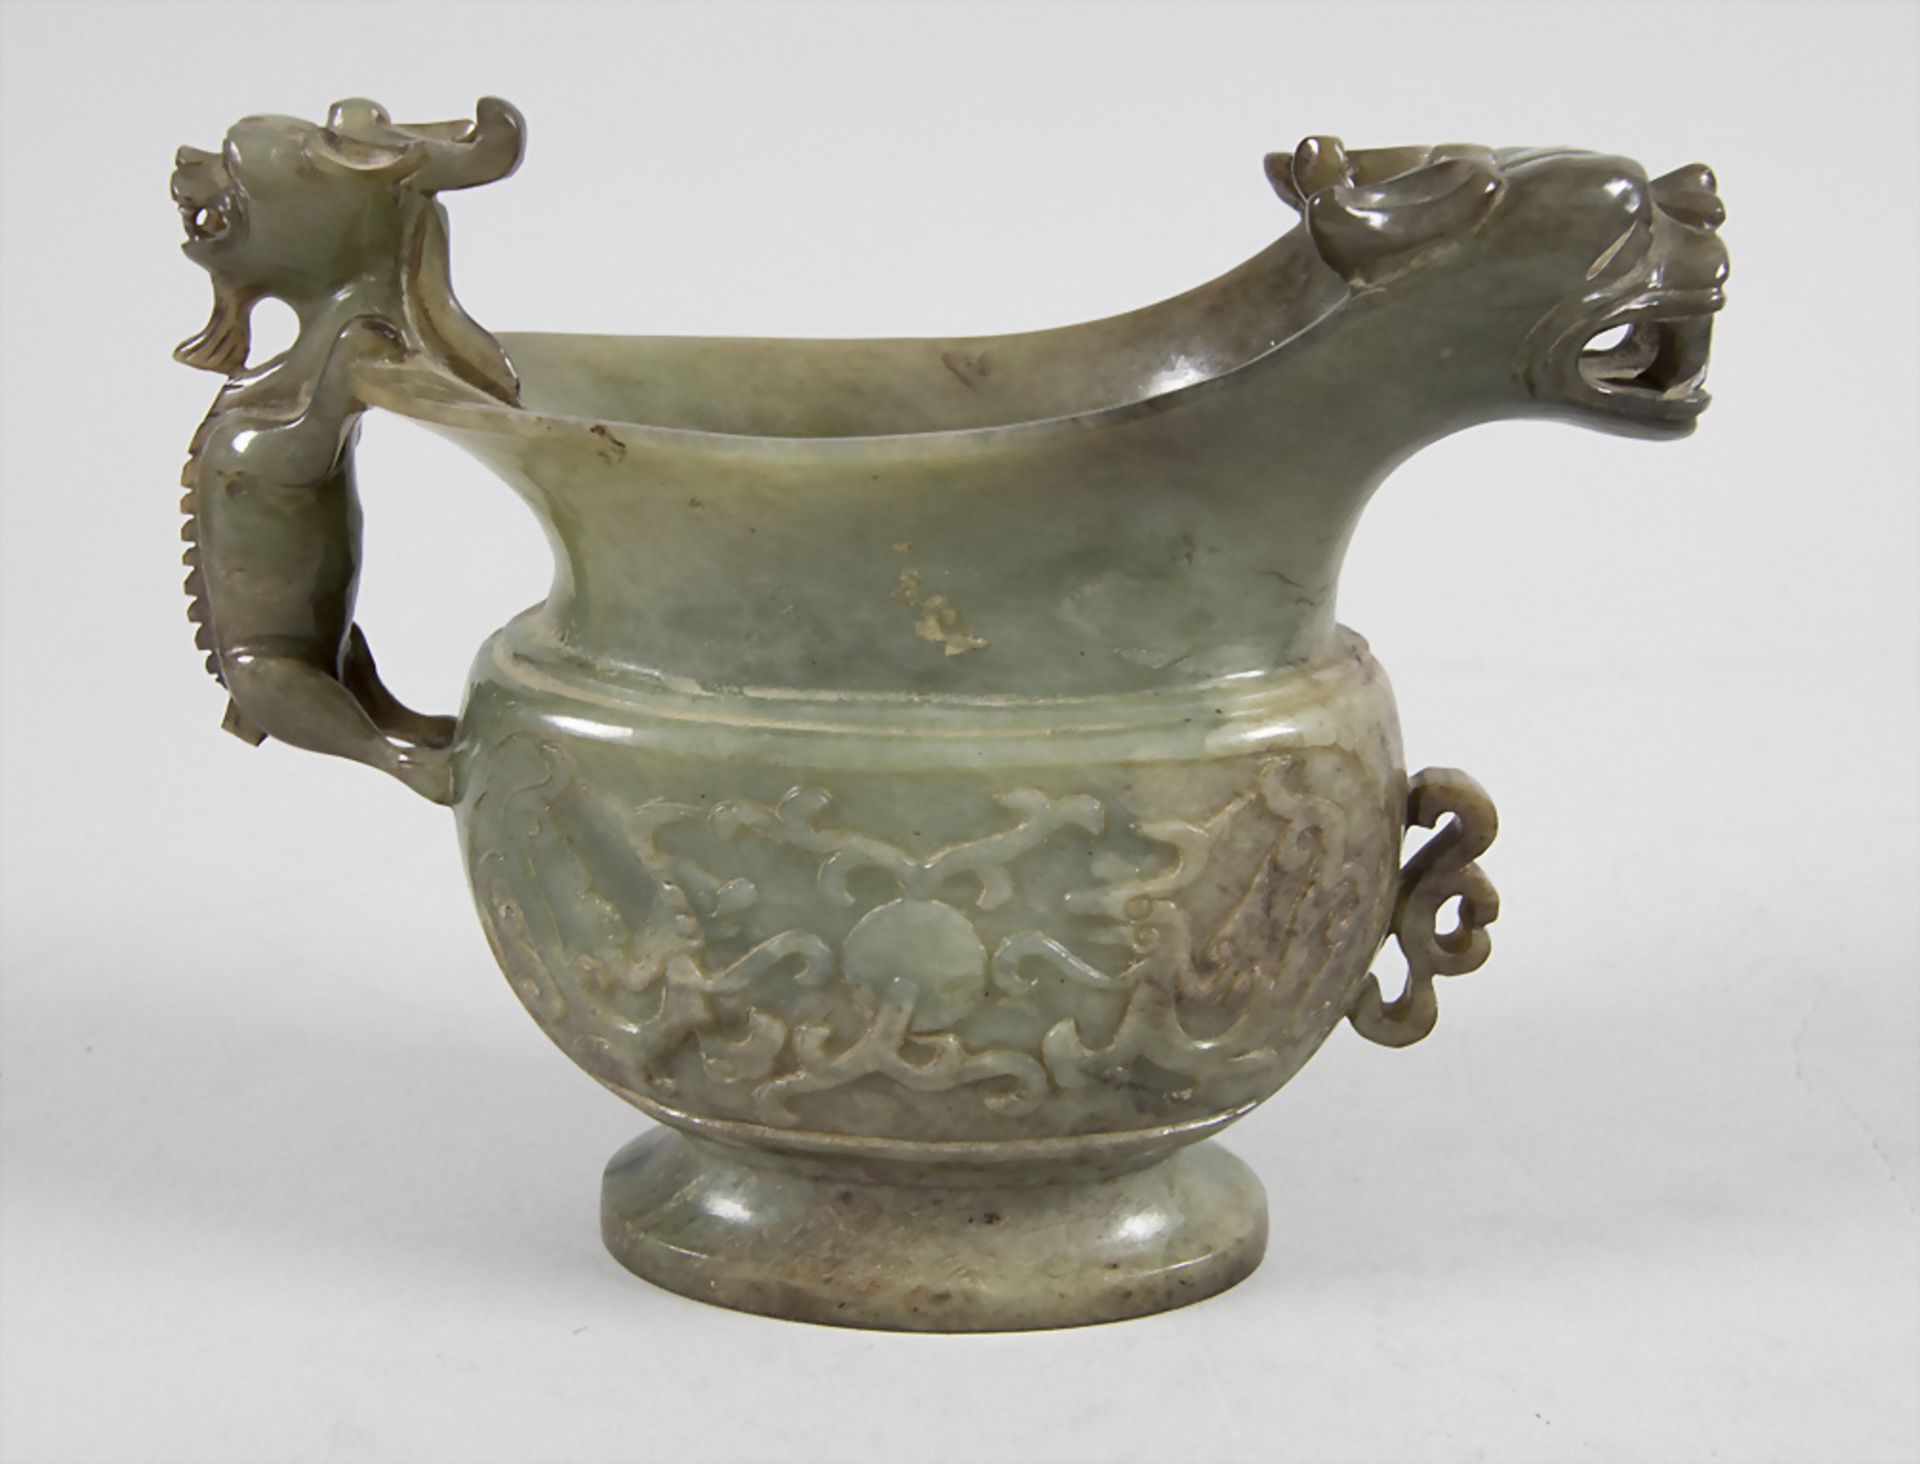 Jade-Ritualgefäß / A jade ritual vessel, China, um 1900